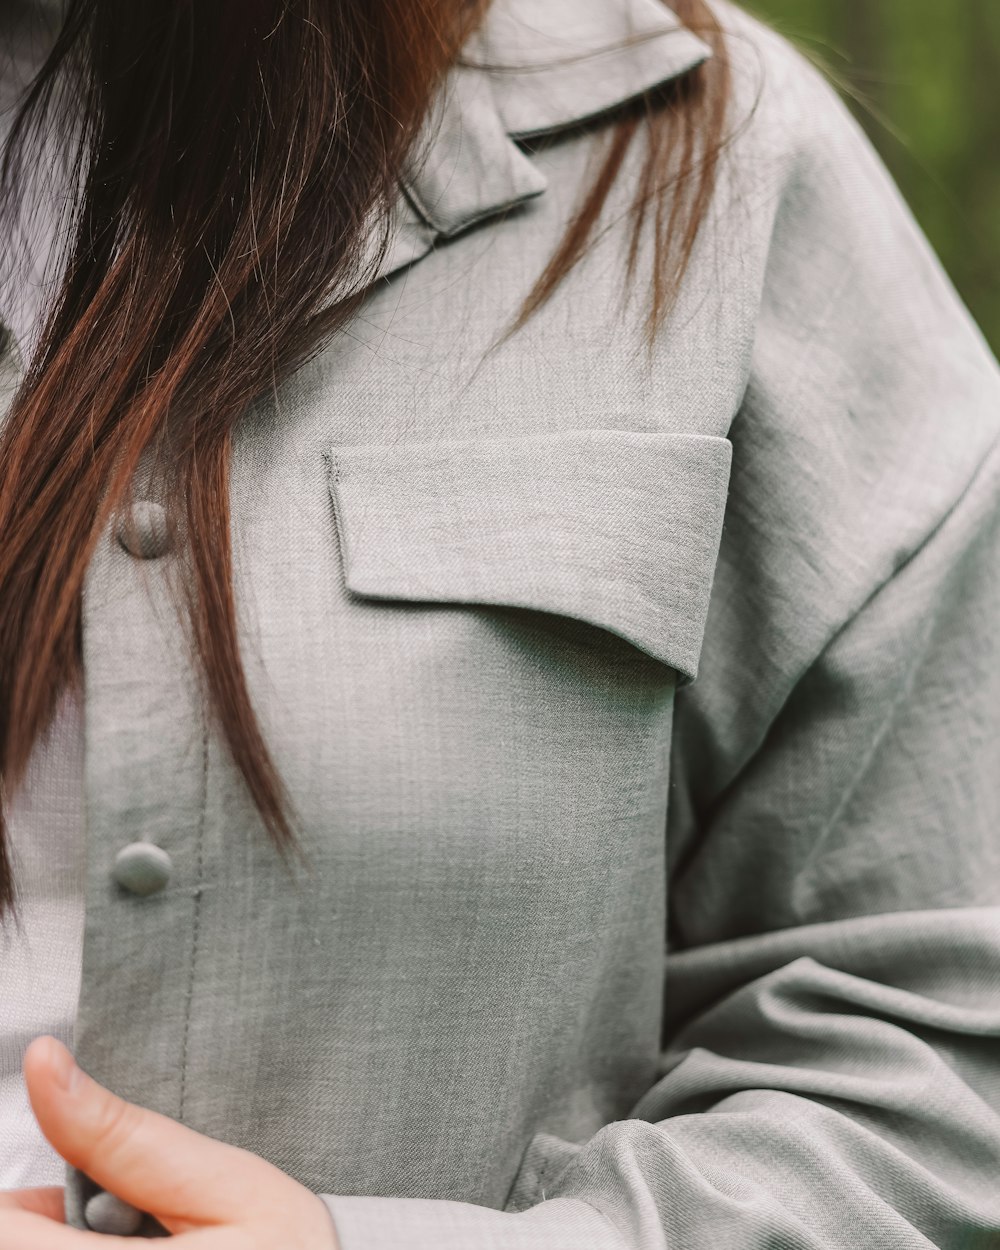 a woman wearing a grey jacket